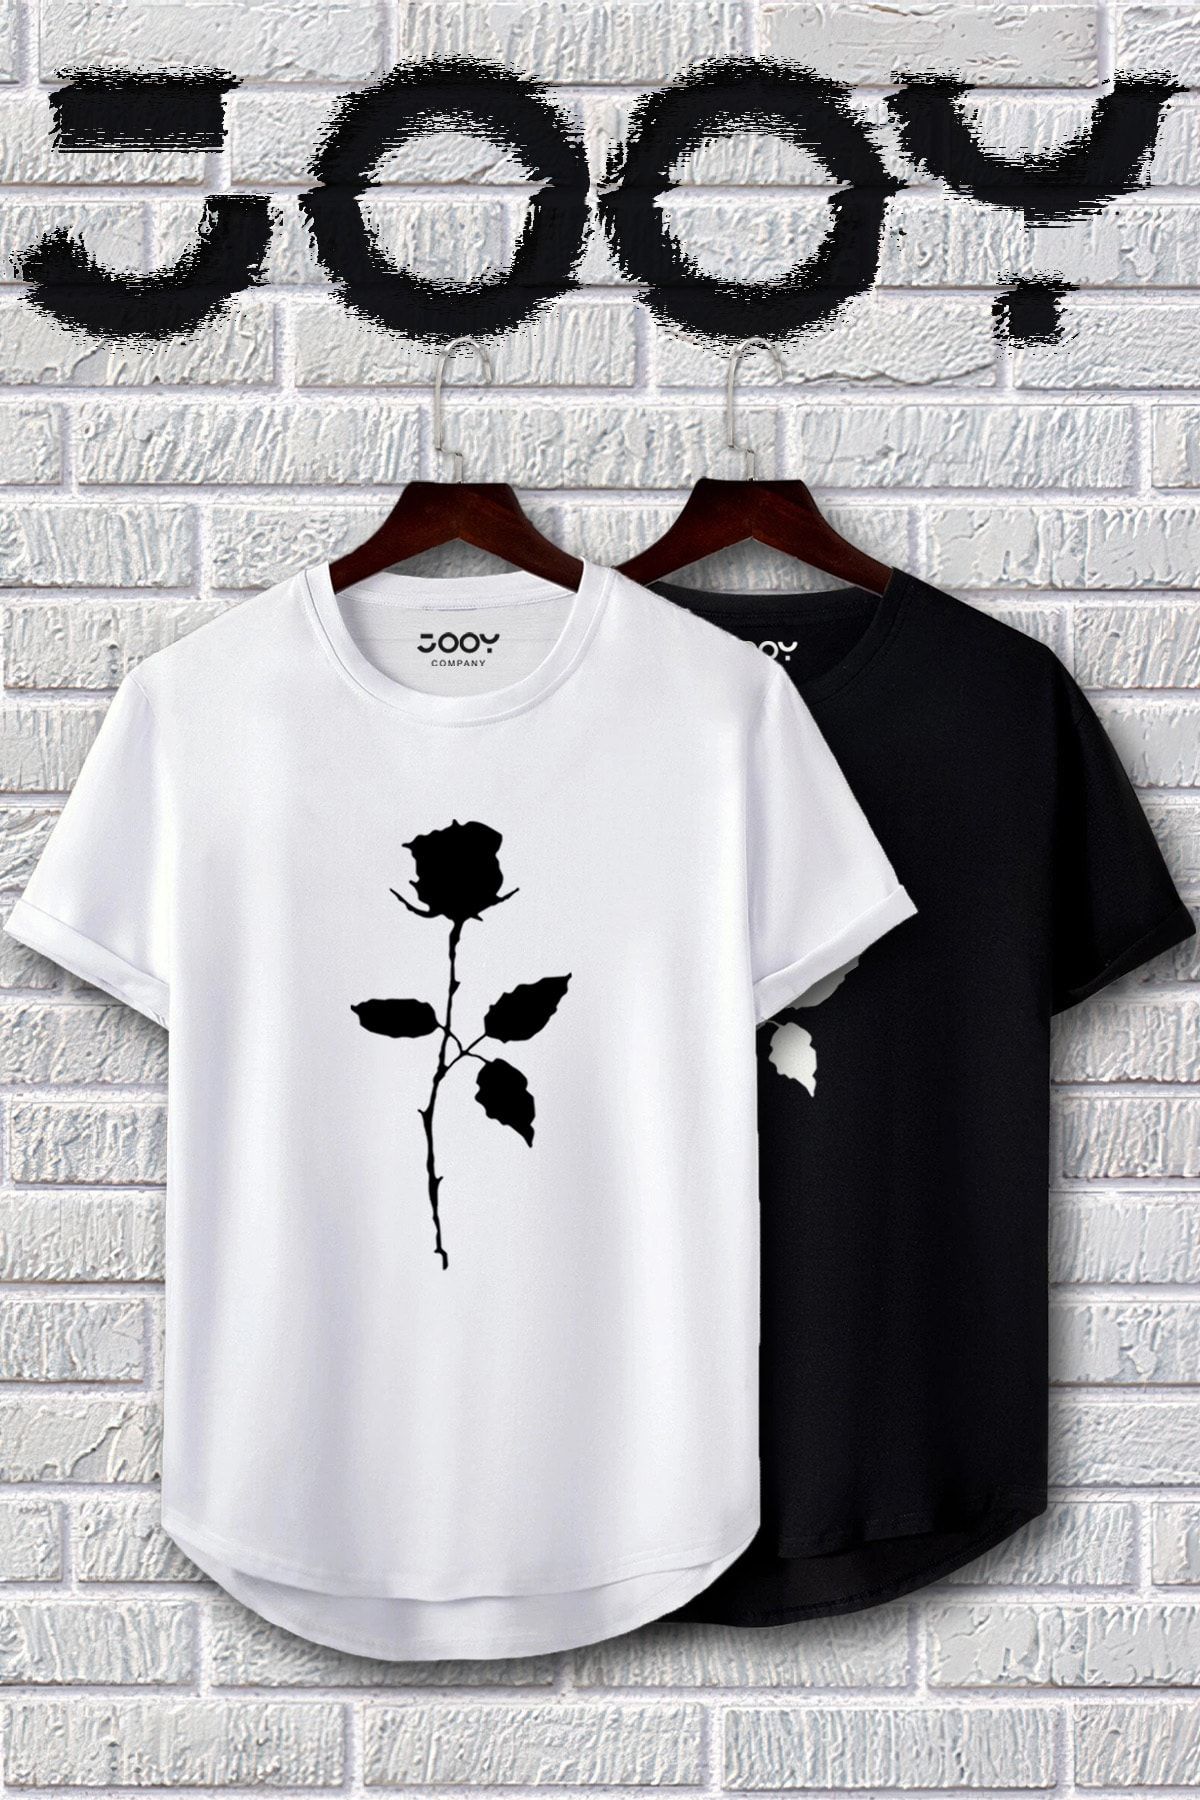 Jooy Company Siyah Beyaz Oval Kesim Gül Tasarım Tshirt 2'li Set